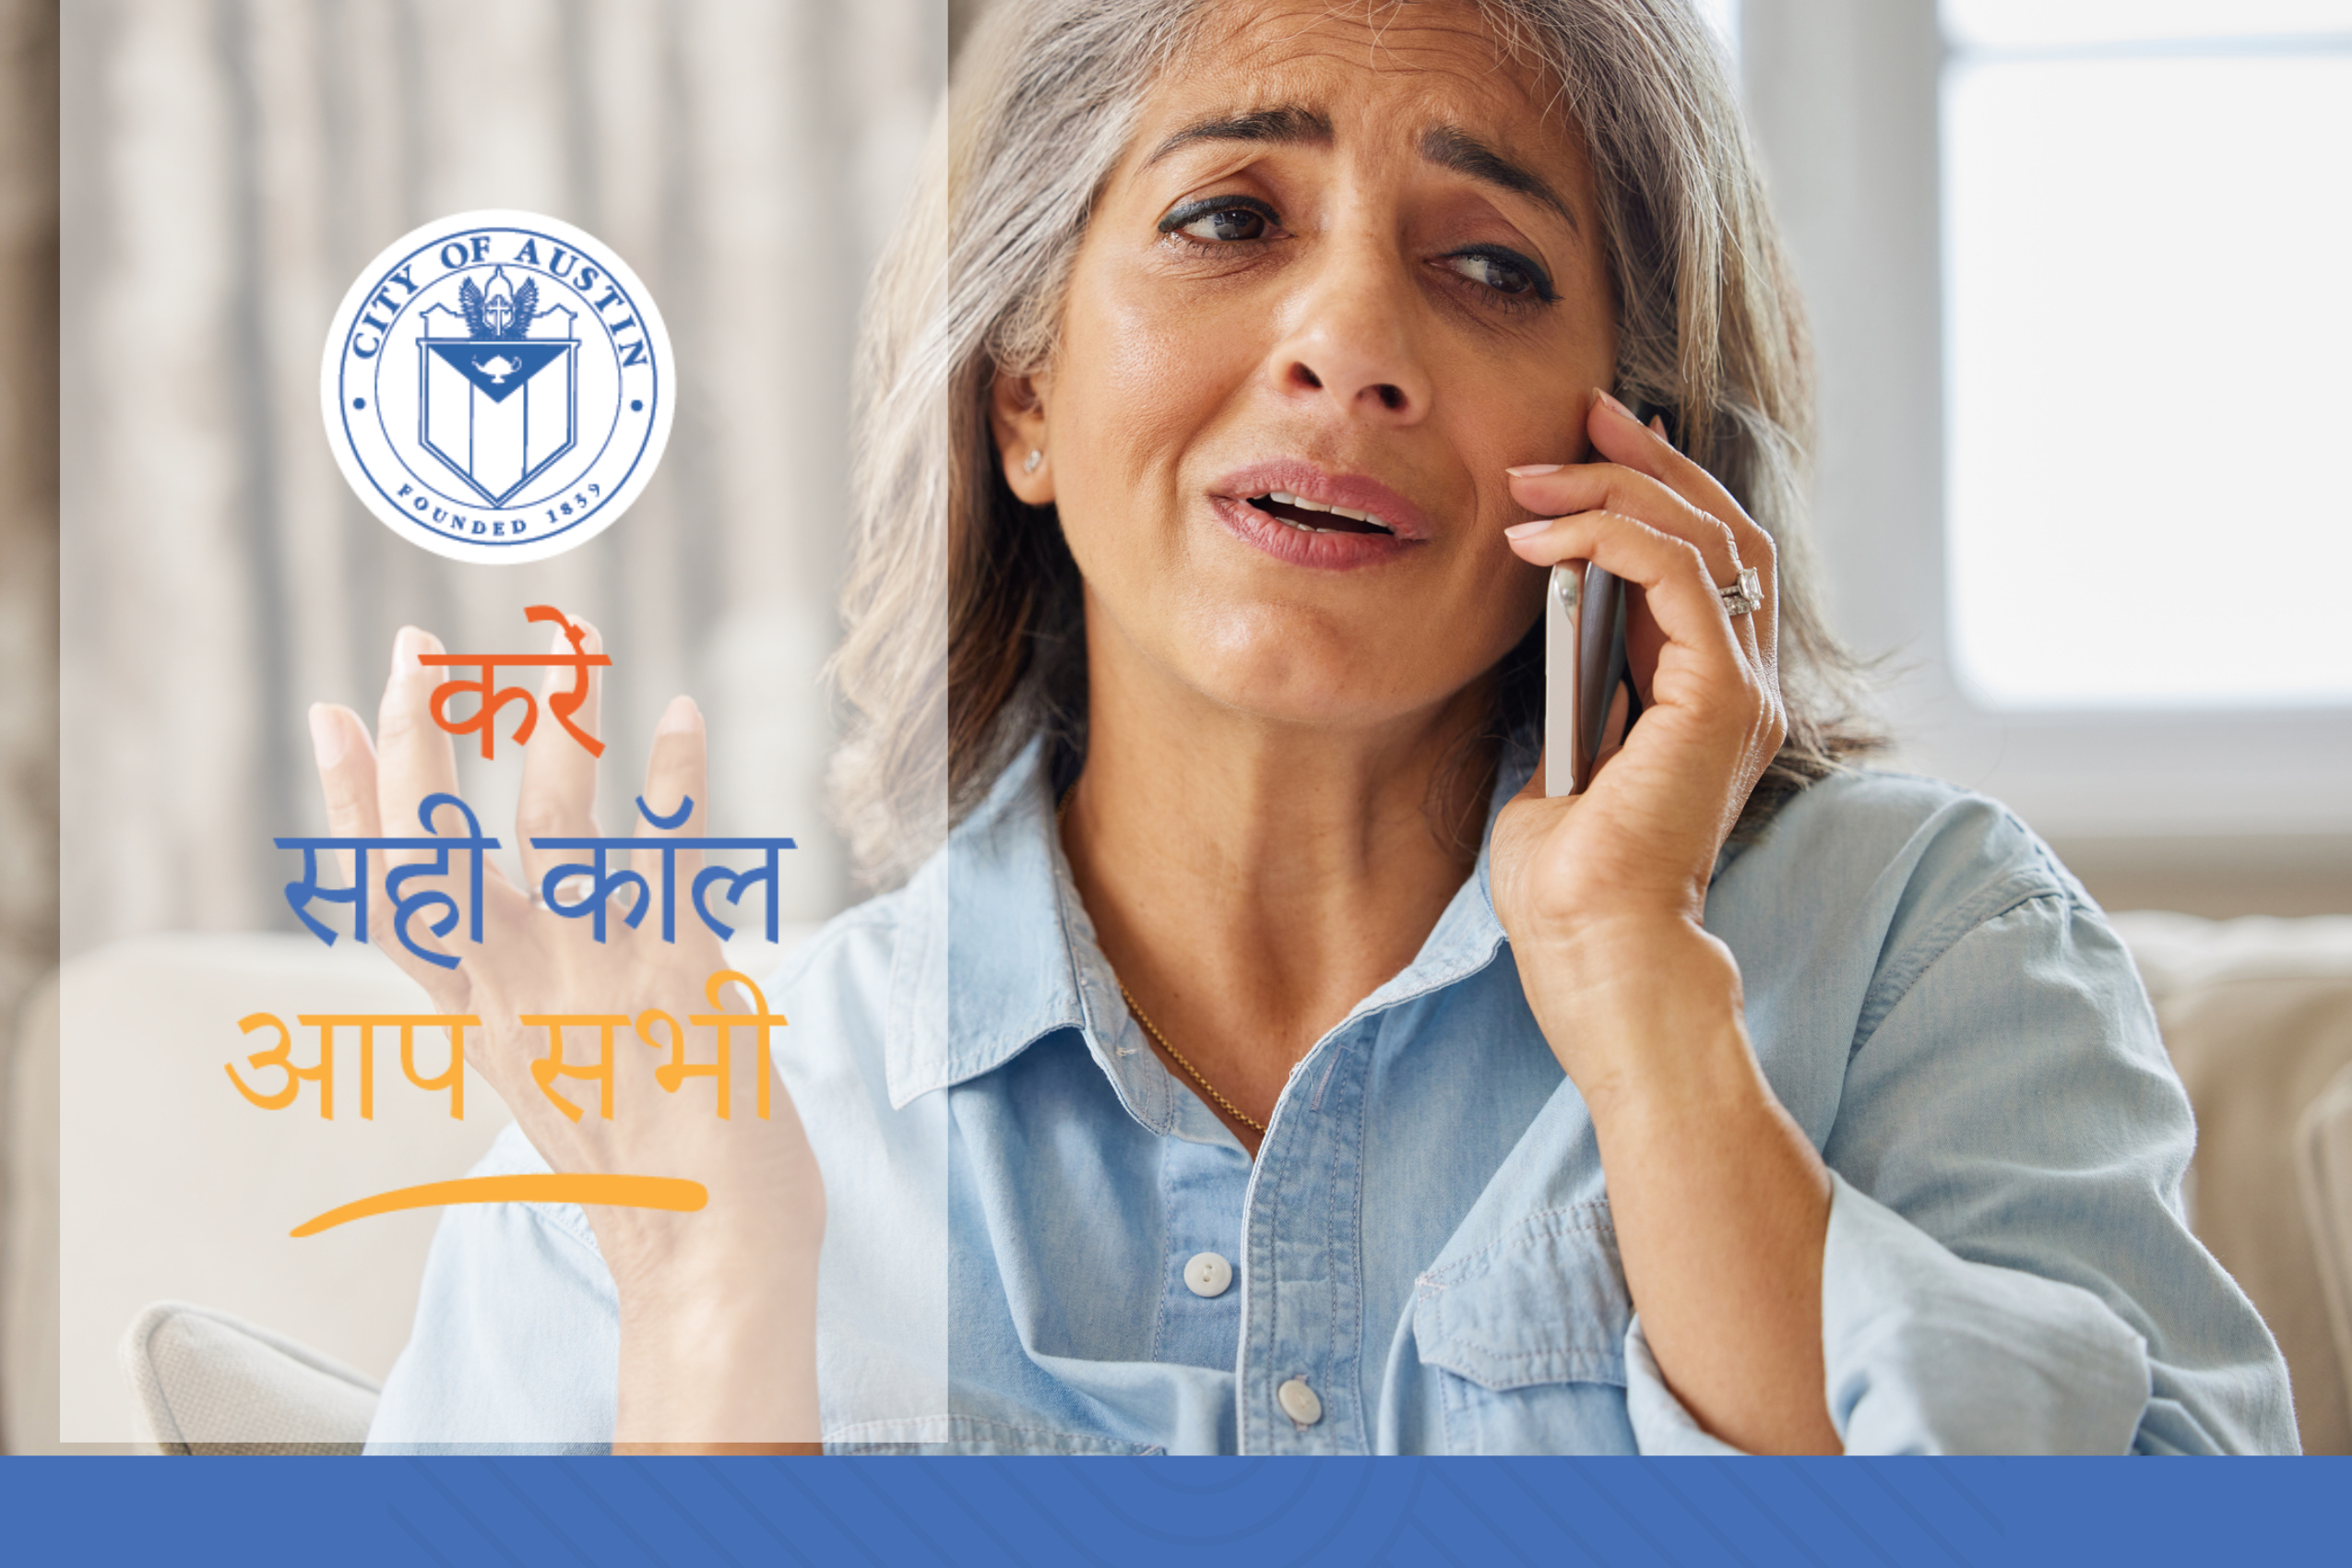 Make the Right Call Promo Graphic Hindi